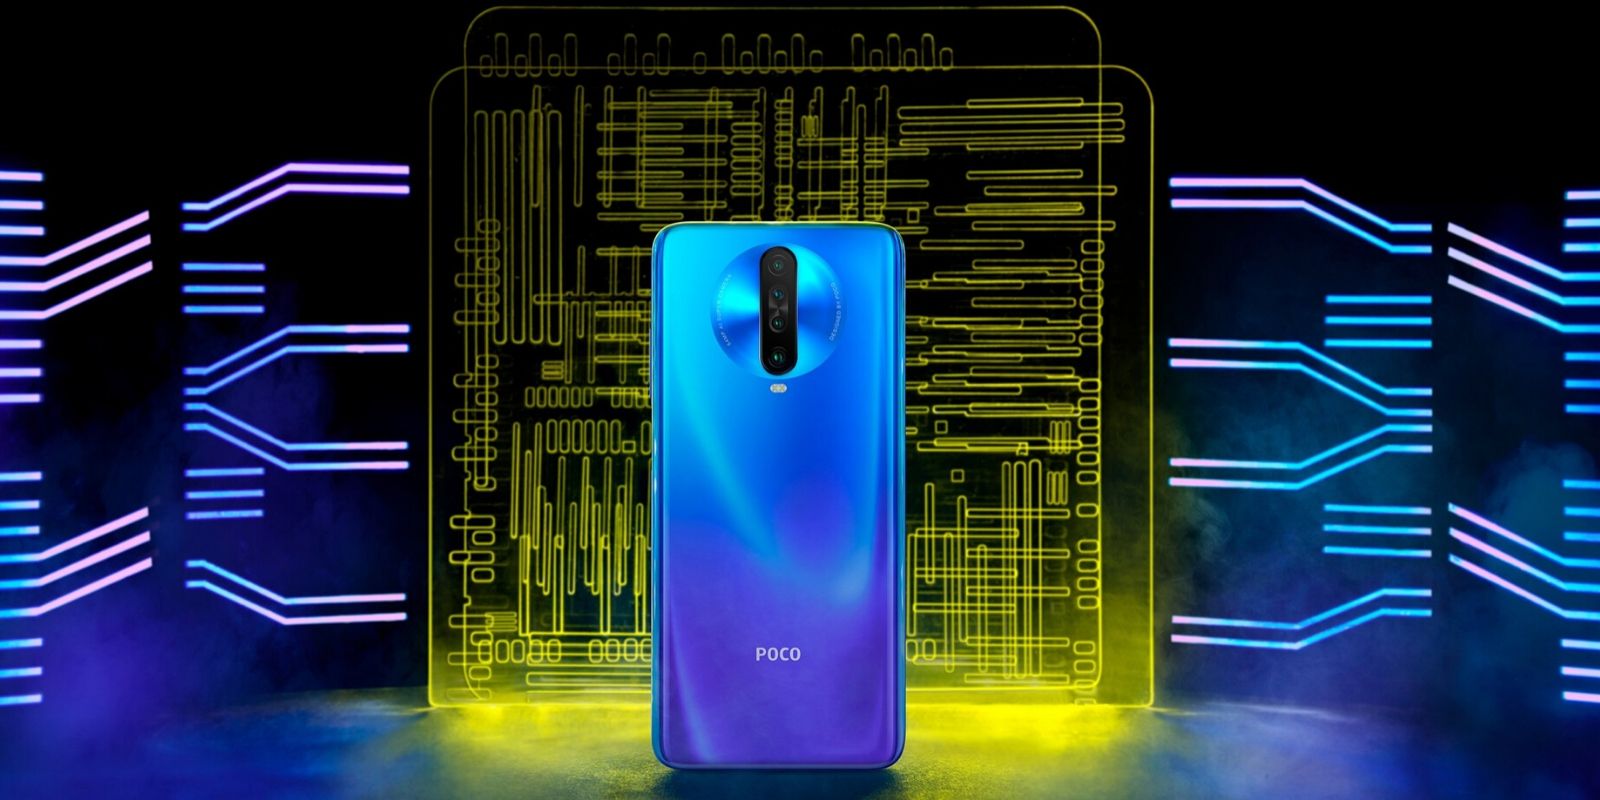 POCO X2 smartphone